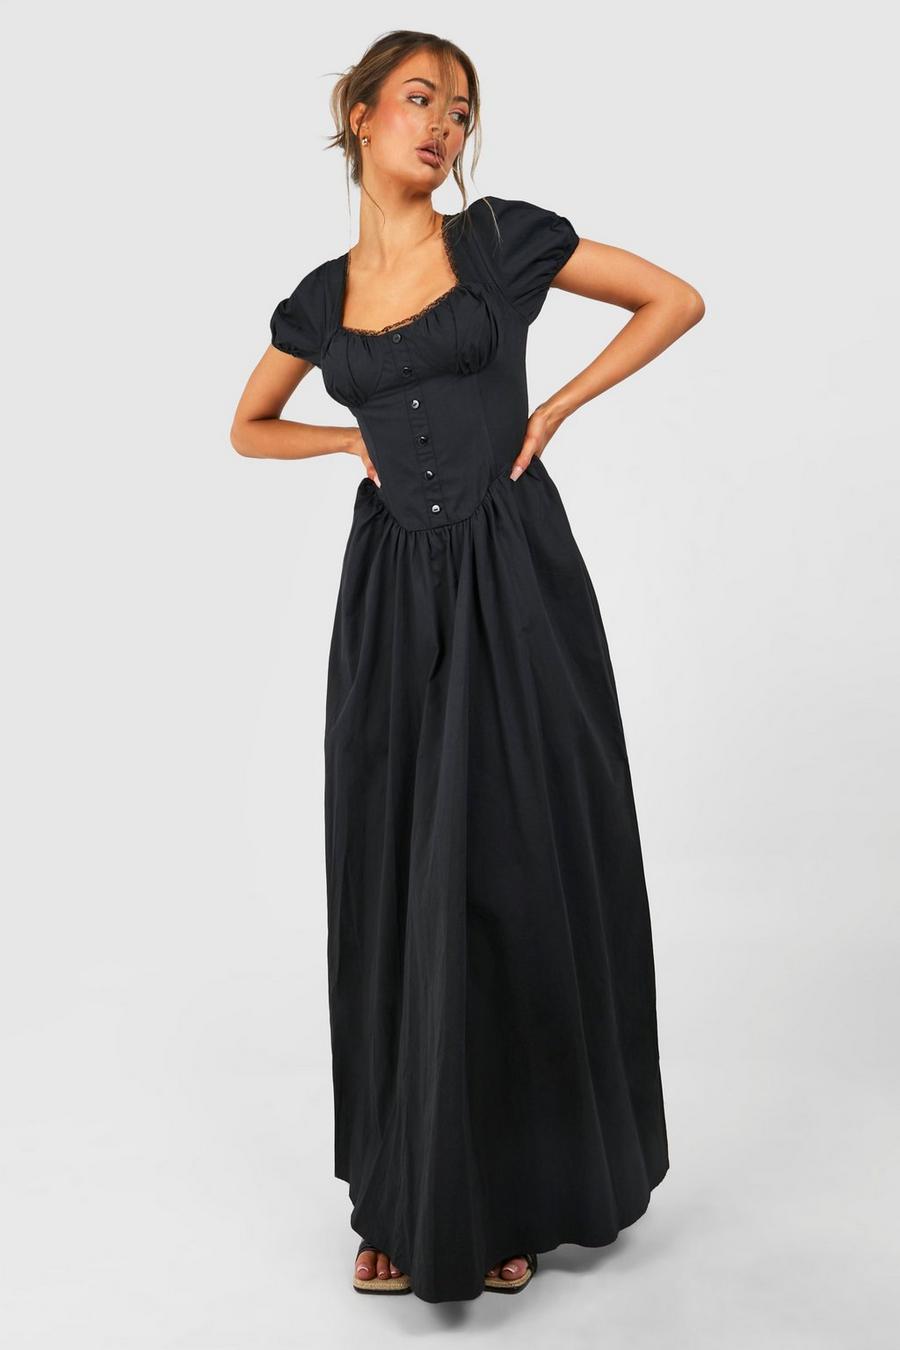 Black Maxi Dresses, Long Black Evening Dresses